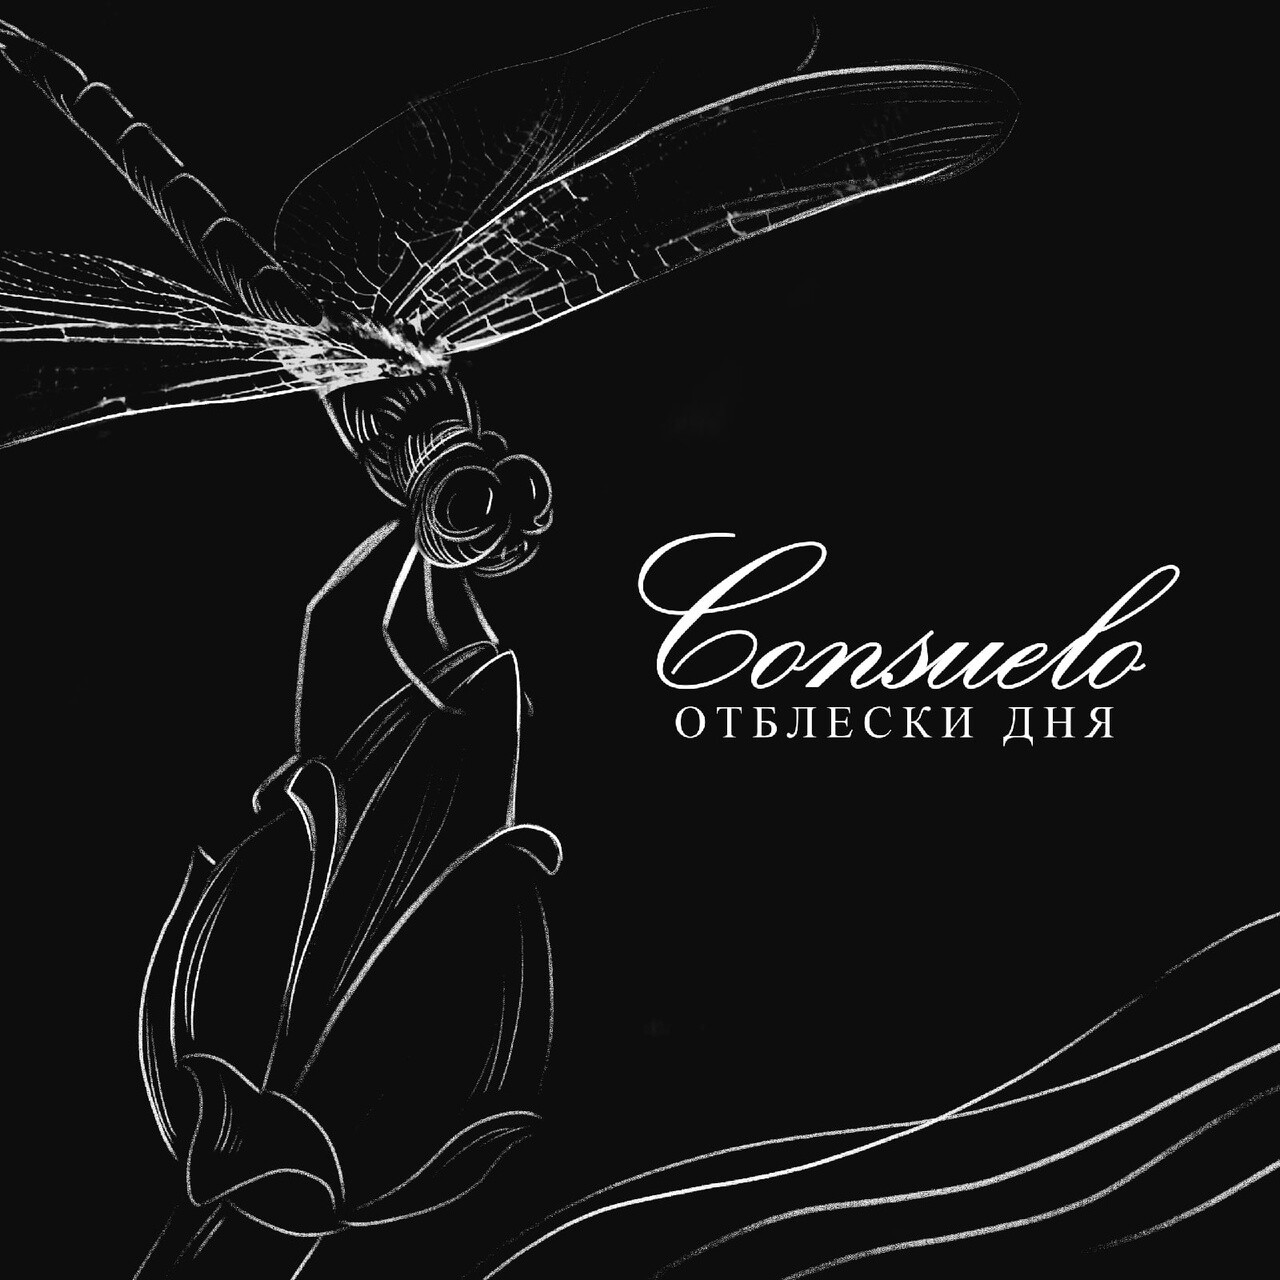 Рецензия на мини-альбом проекта Consuelo 